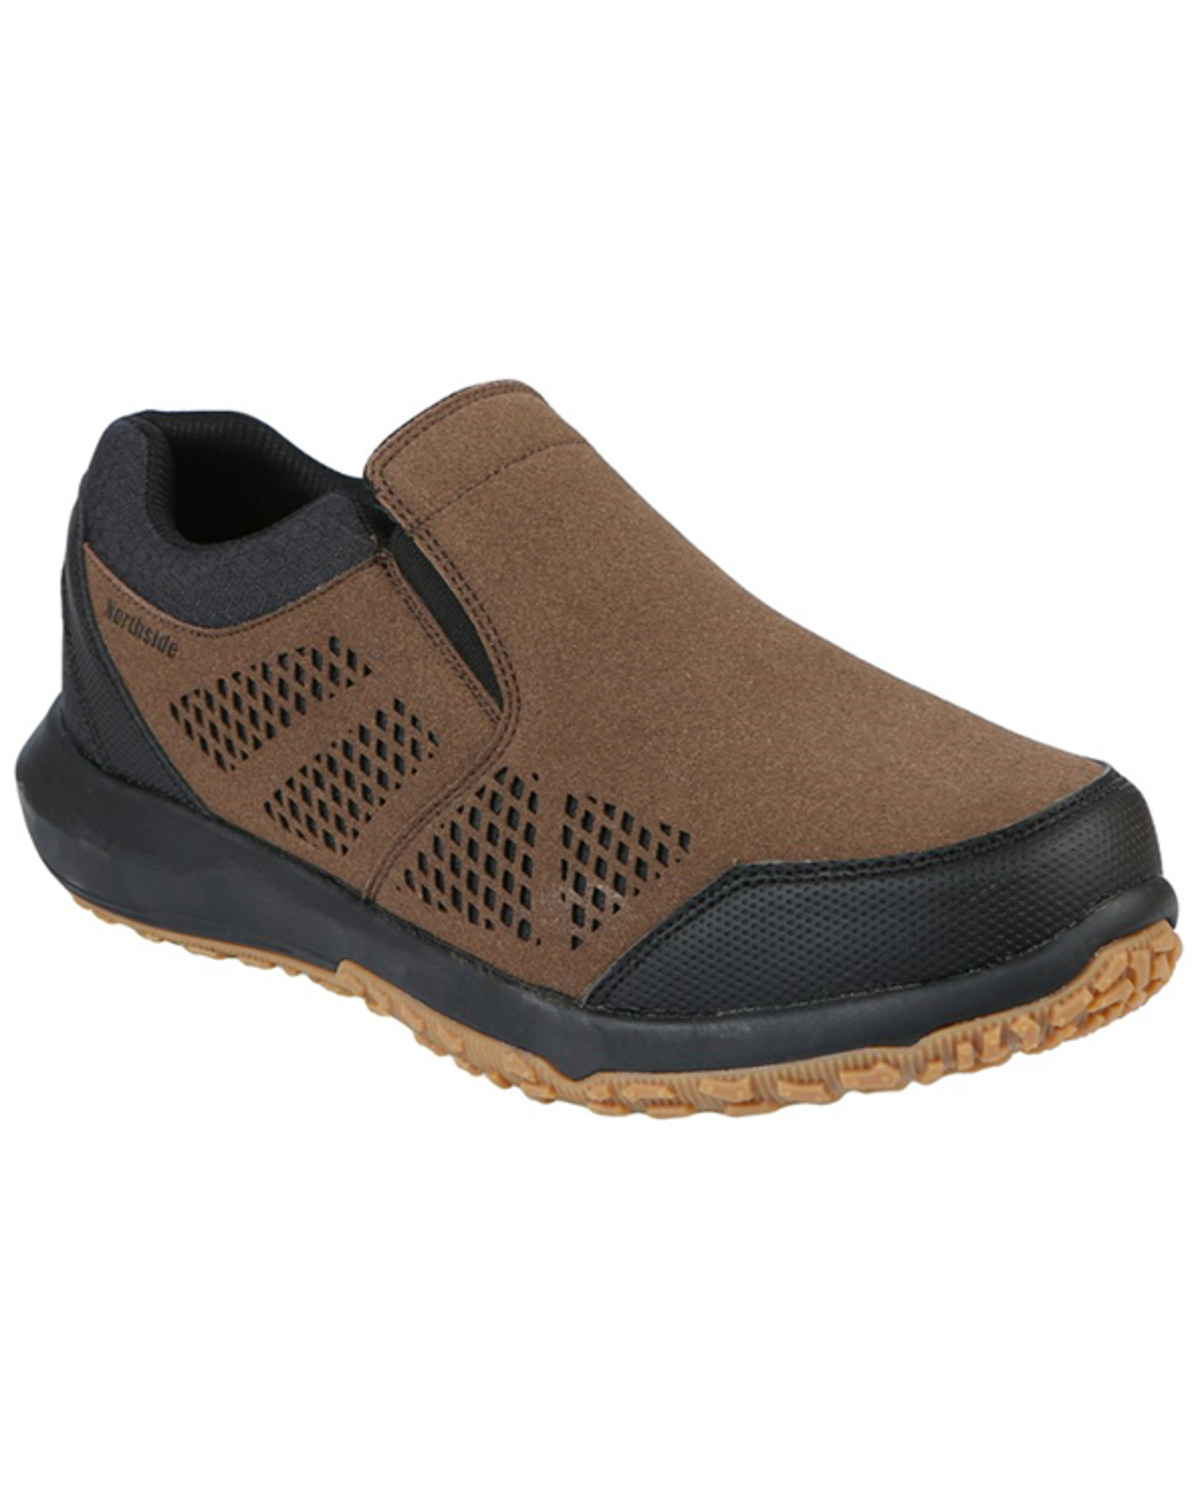 Northside Men's Benton Slip-On Hiking Shoes - Round Toe